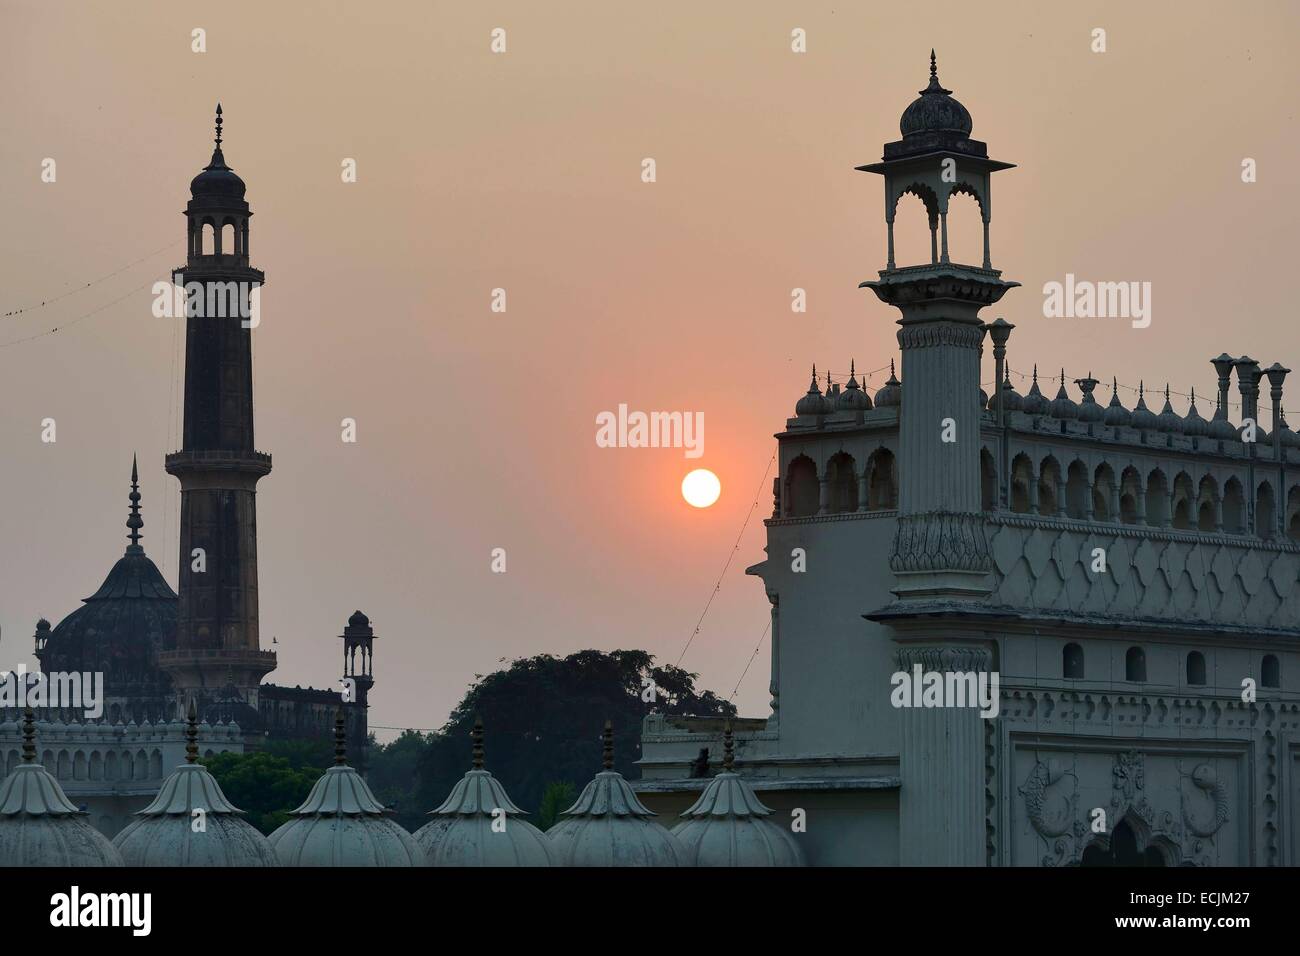 L'Inde, Uttar Pradesh, Lucknow, Bara Imambara et Masafi mosque at sunset Banque D'Images